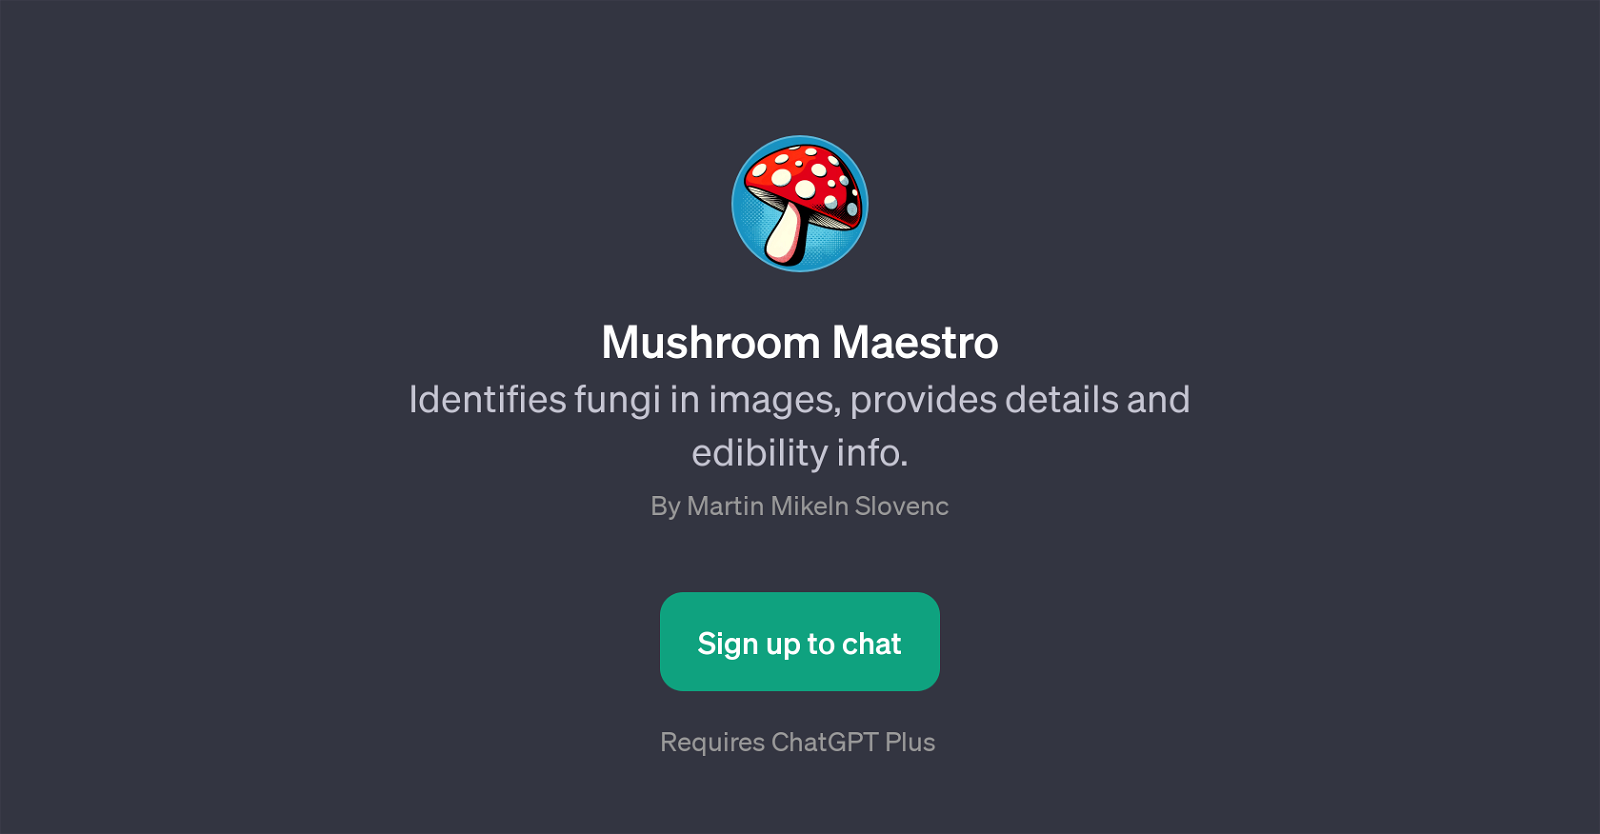 Mushroom Maestro website